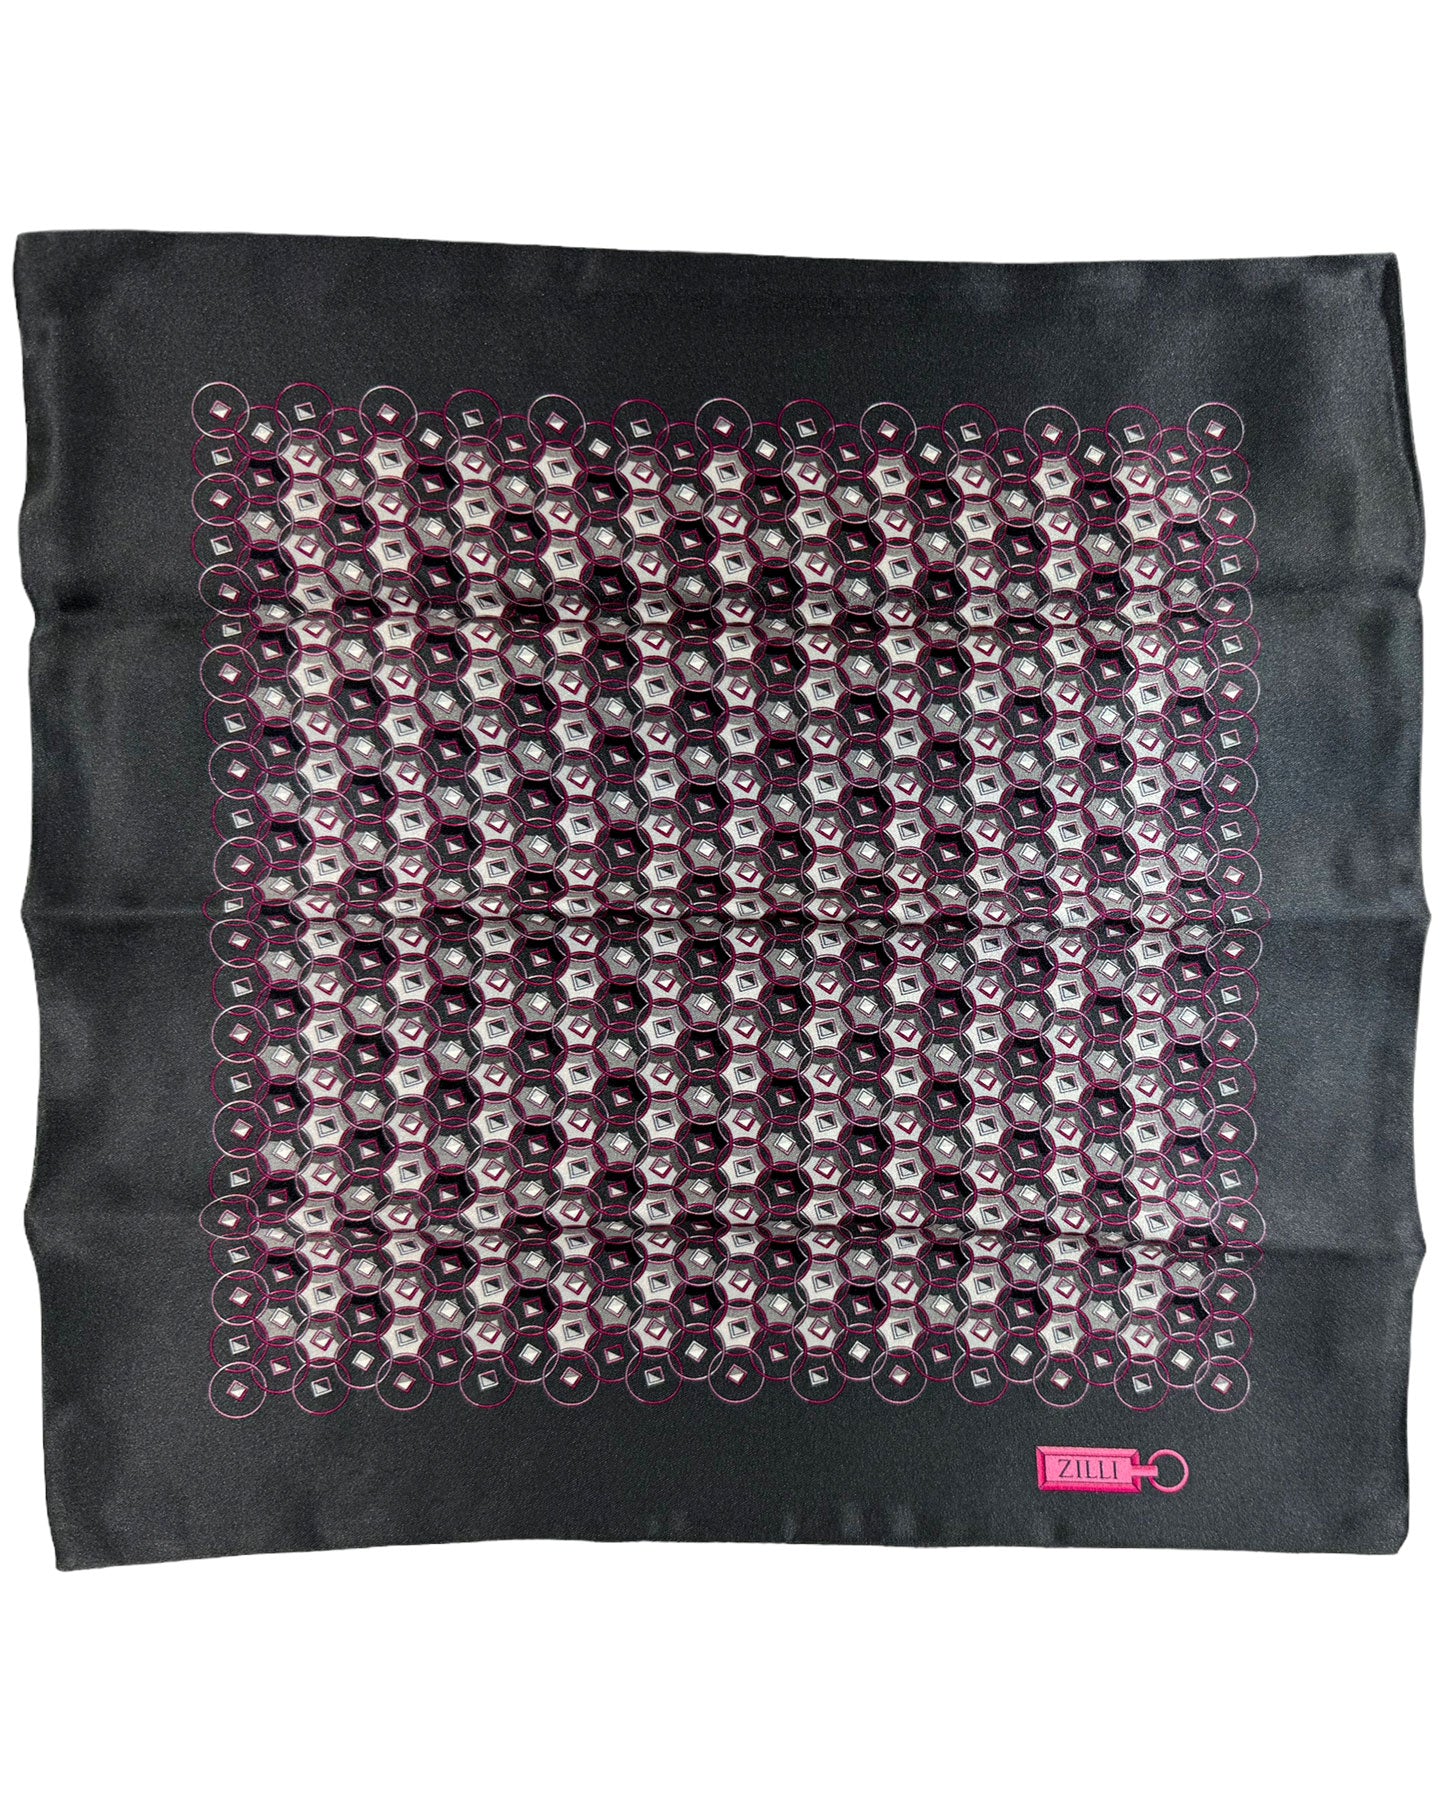 Zilli Silk Pocket Square Black Pink Geometric Design